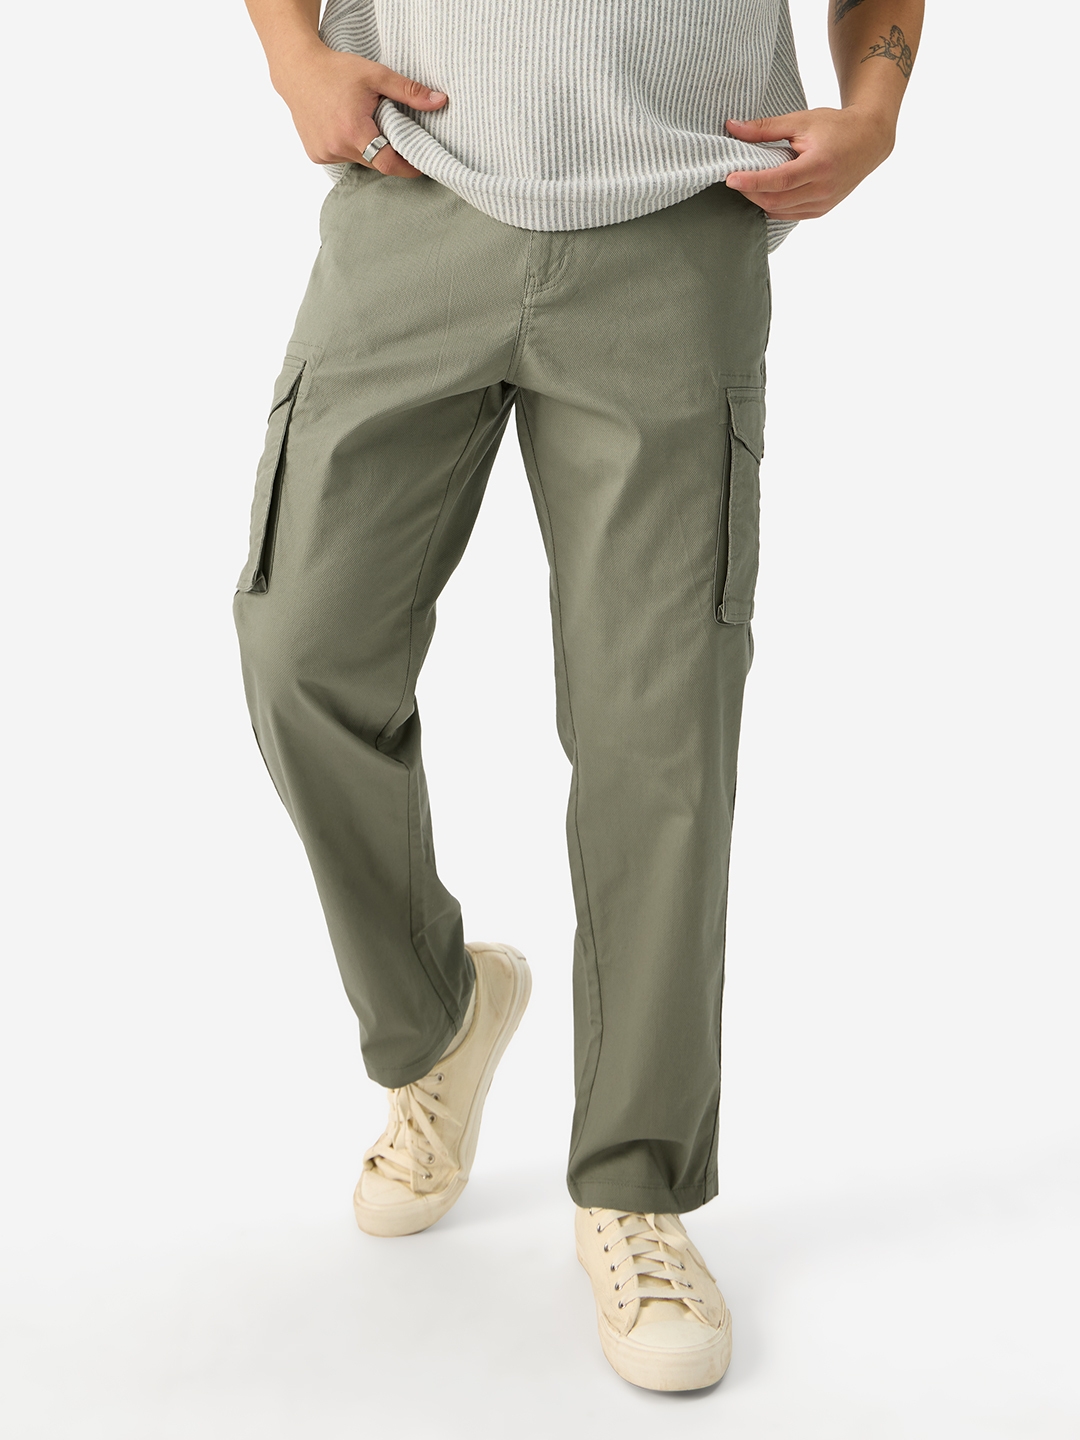 Men's Solids Light Olive Cargo Pants